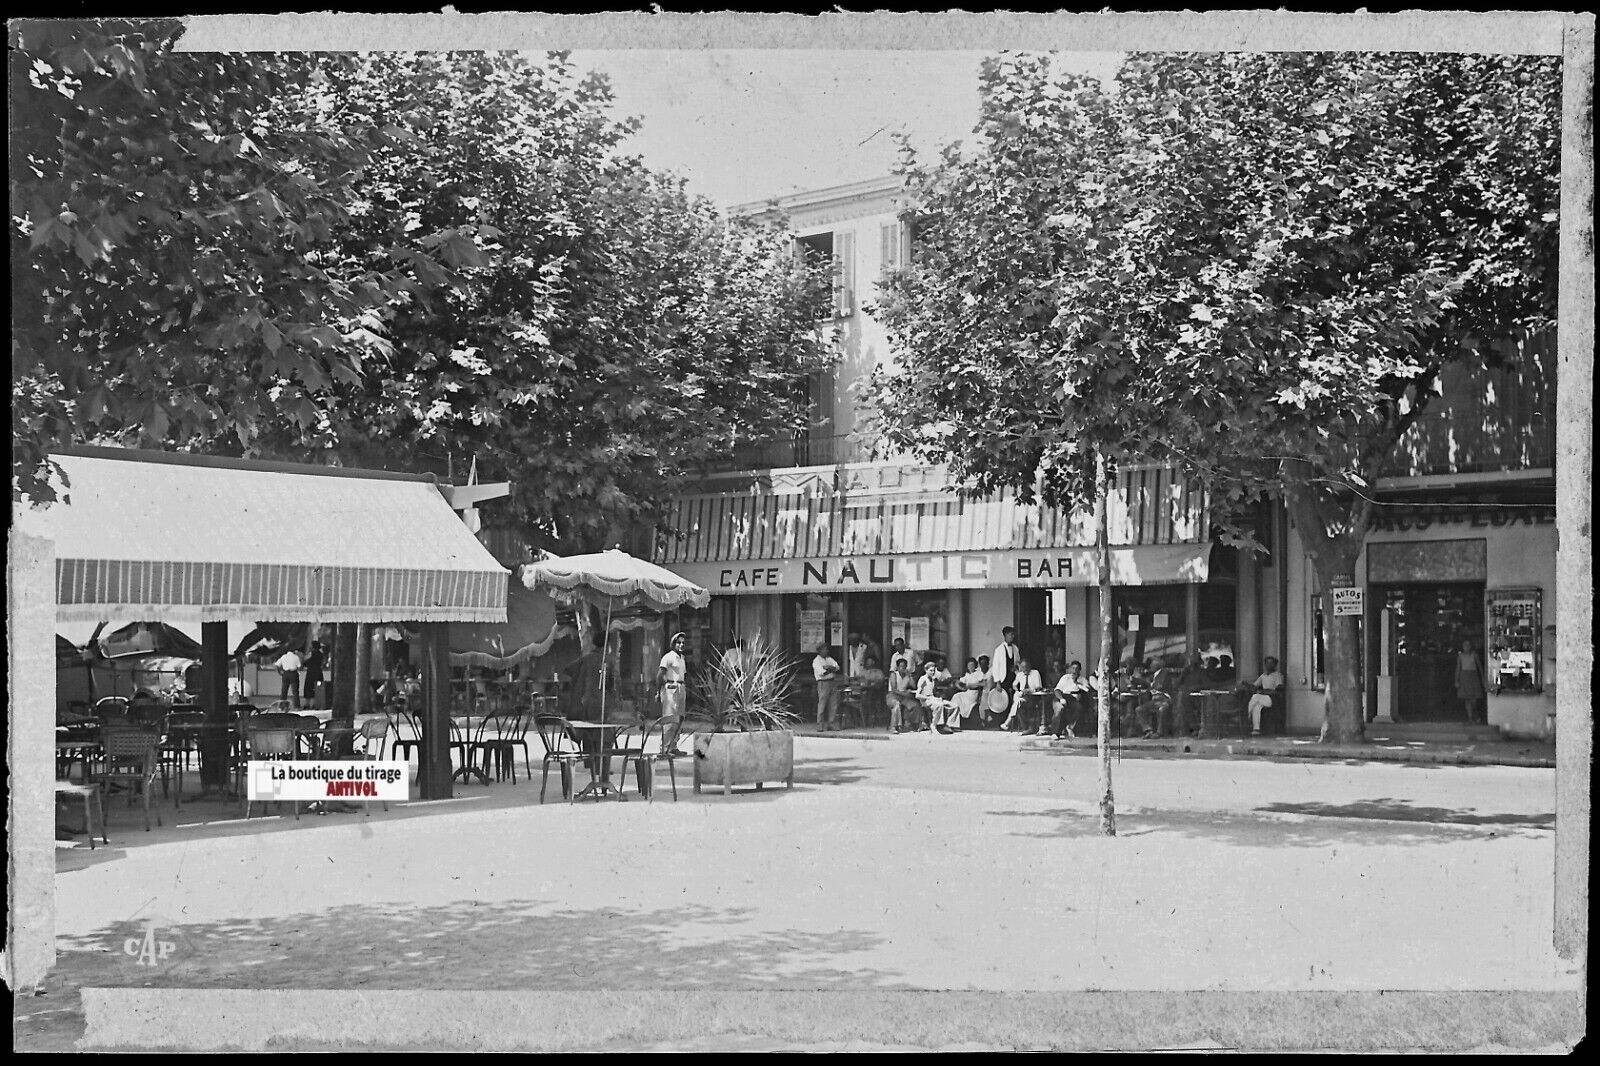 Sainte-Maxime, Café bar Nautic, photo glass plate, black & white negative 9x14 cm